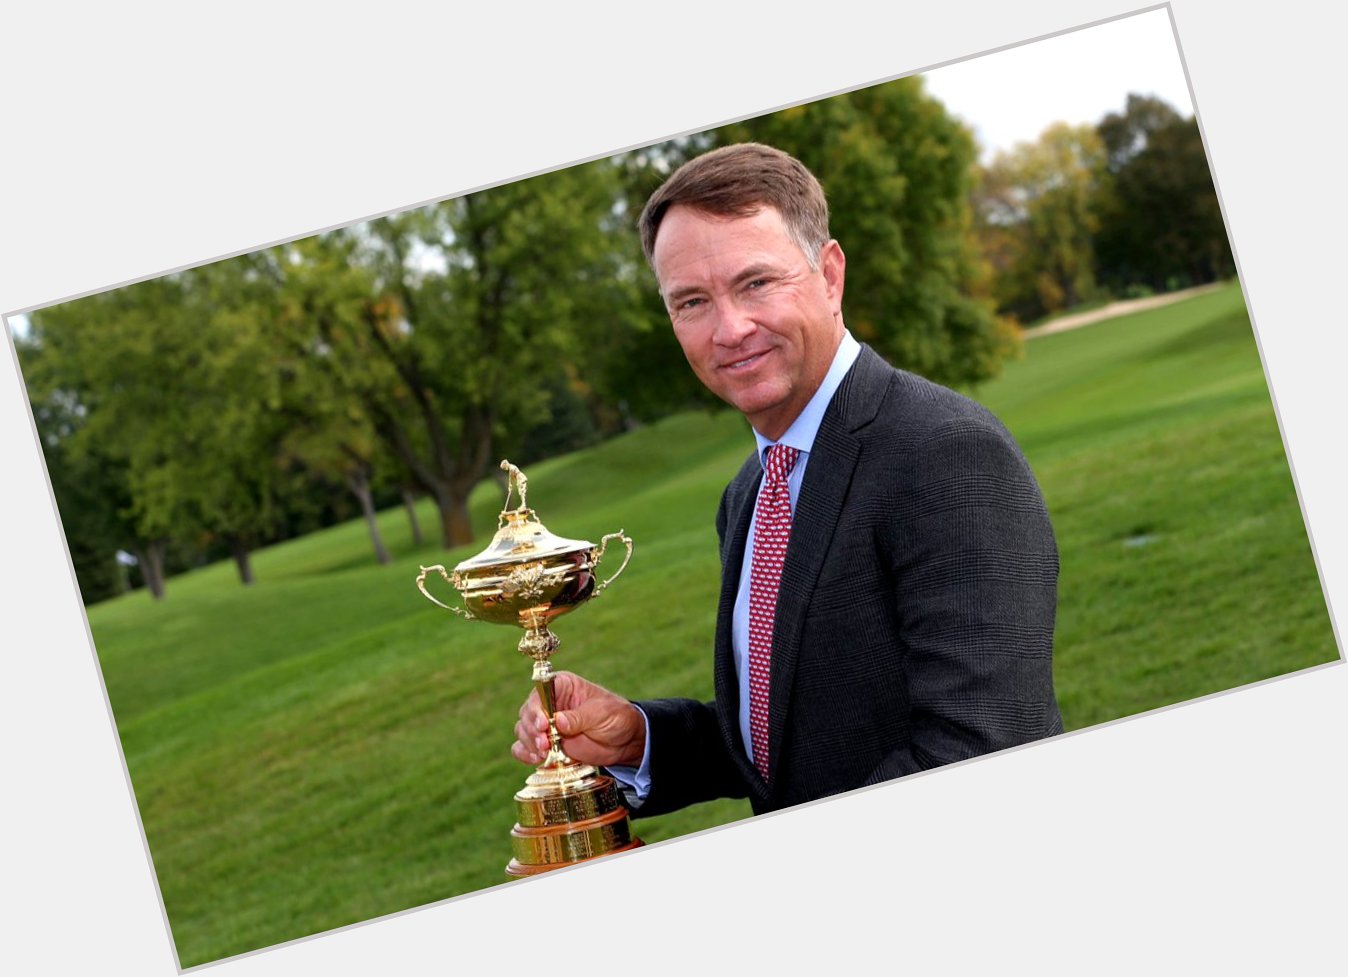 Happy birthday to the winner of 21 PGA Tour events, Davis Love III! 